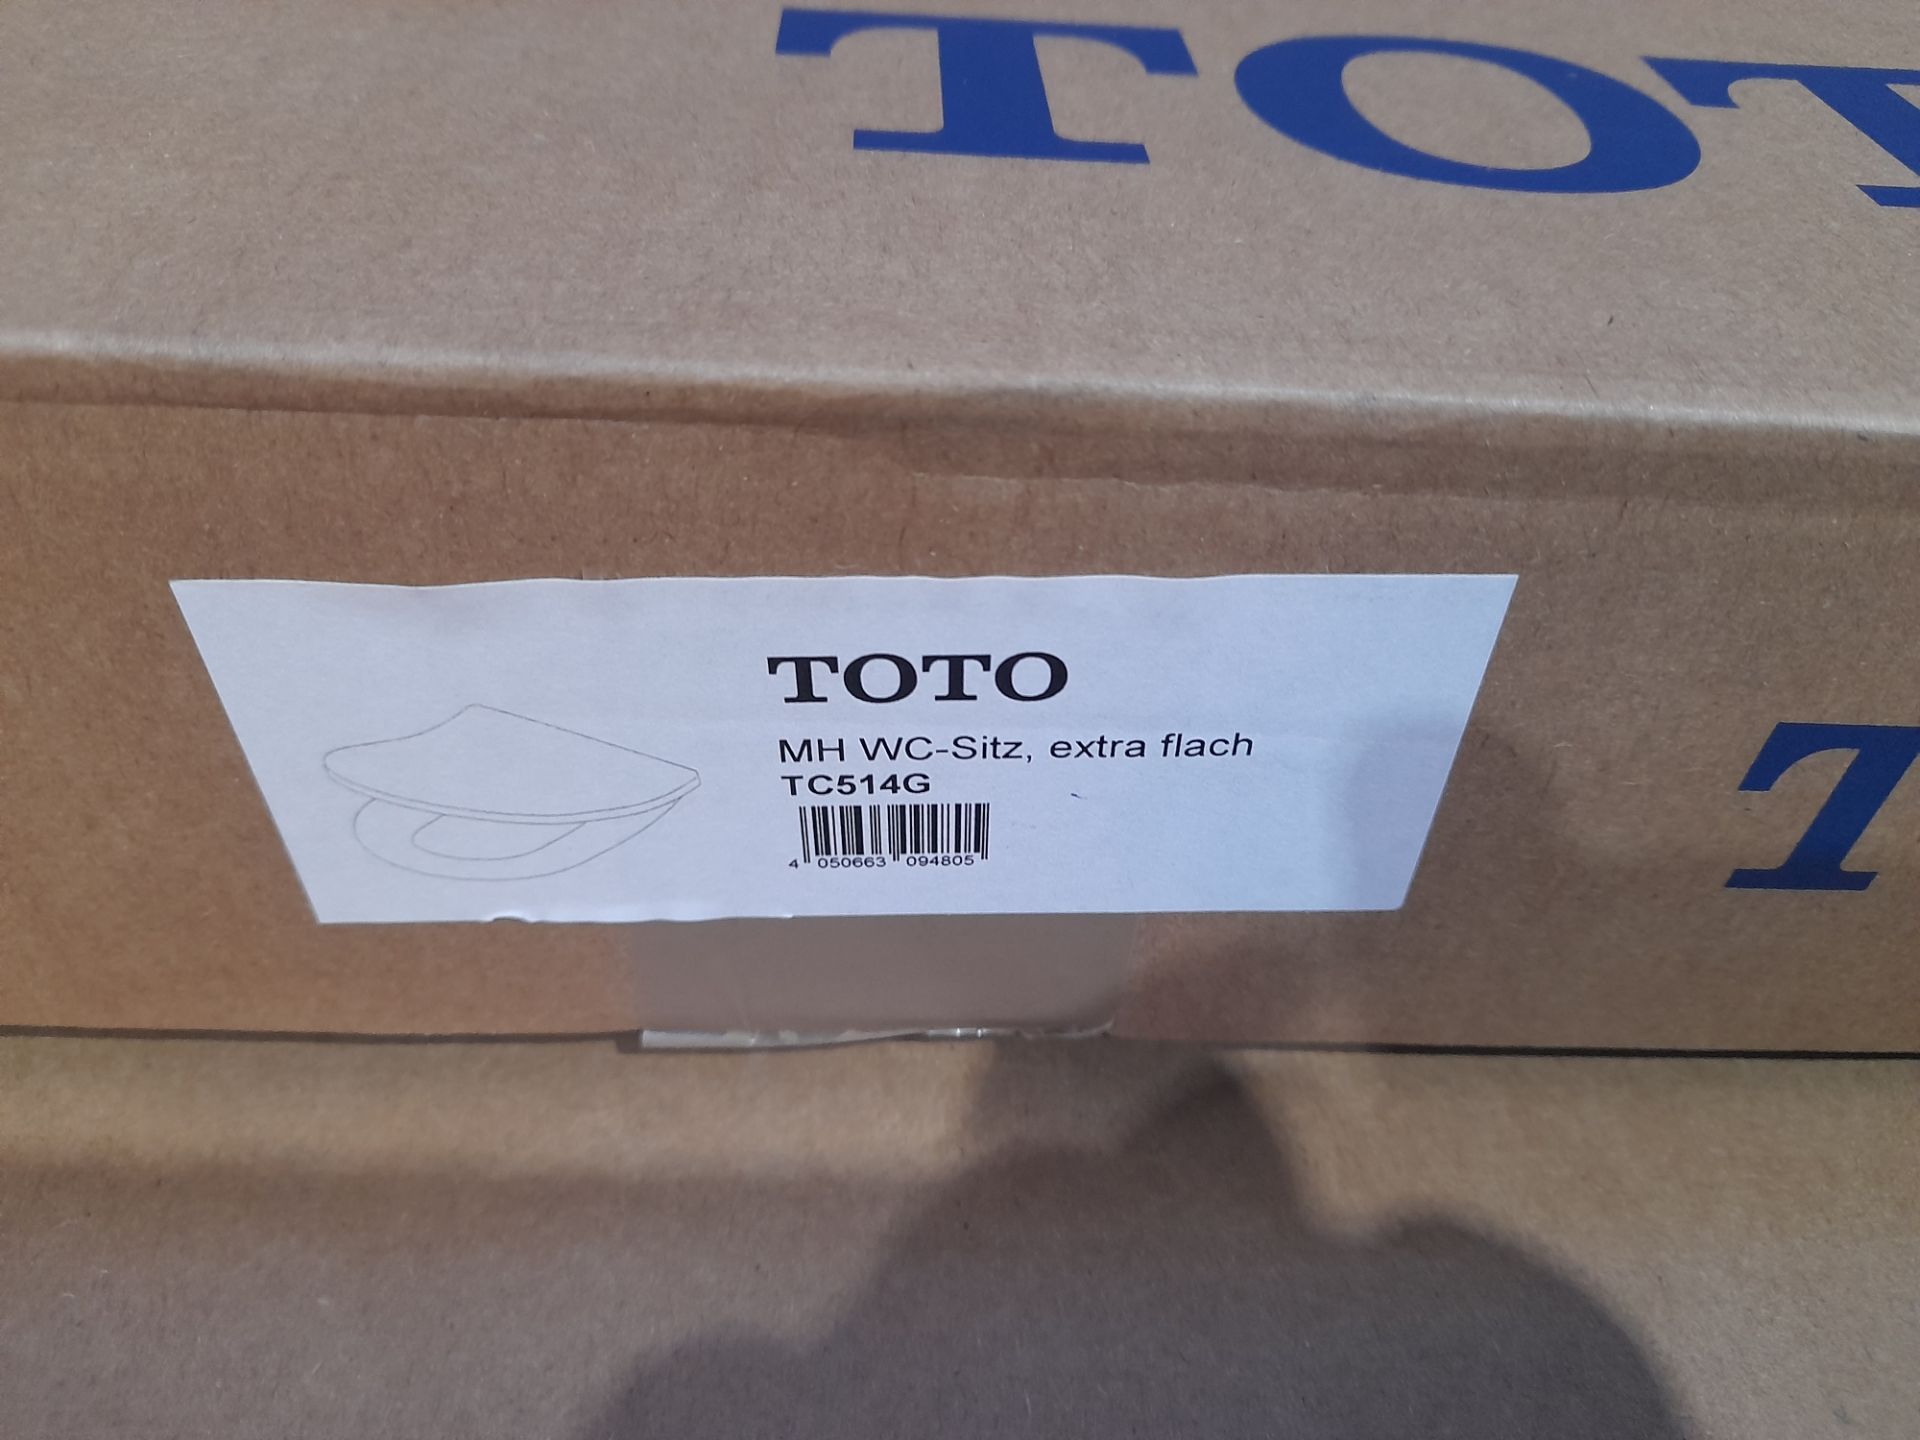 Toto Toilet Seat (MHWCSITZ Extra Flach) (TC514G) (Boxed) - Image 2 of 2